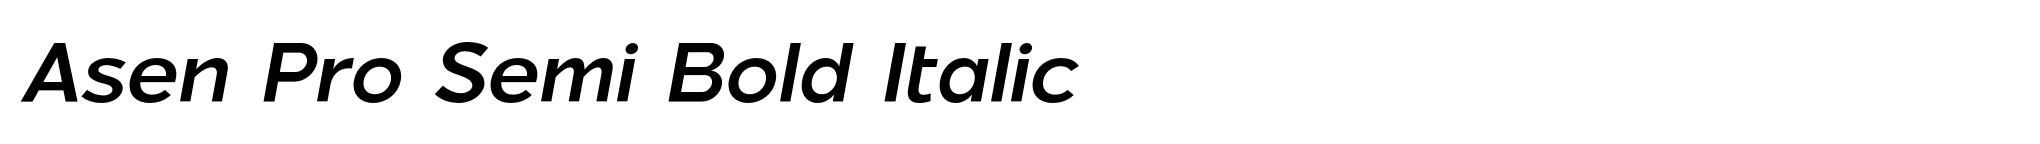 Asen Pro Semi Bold Italic image